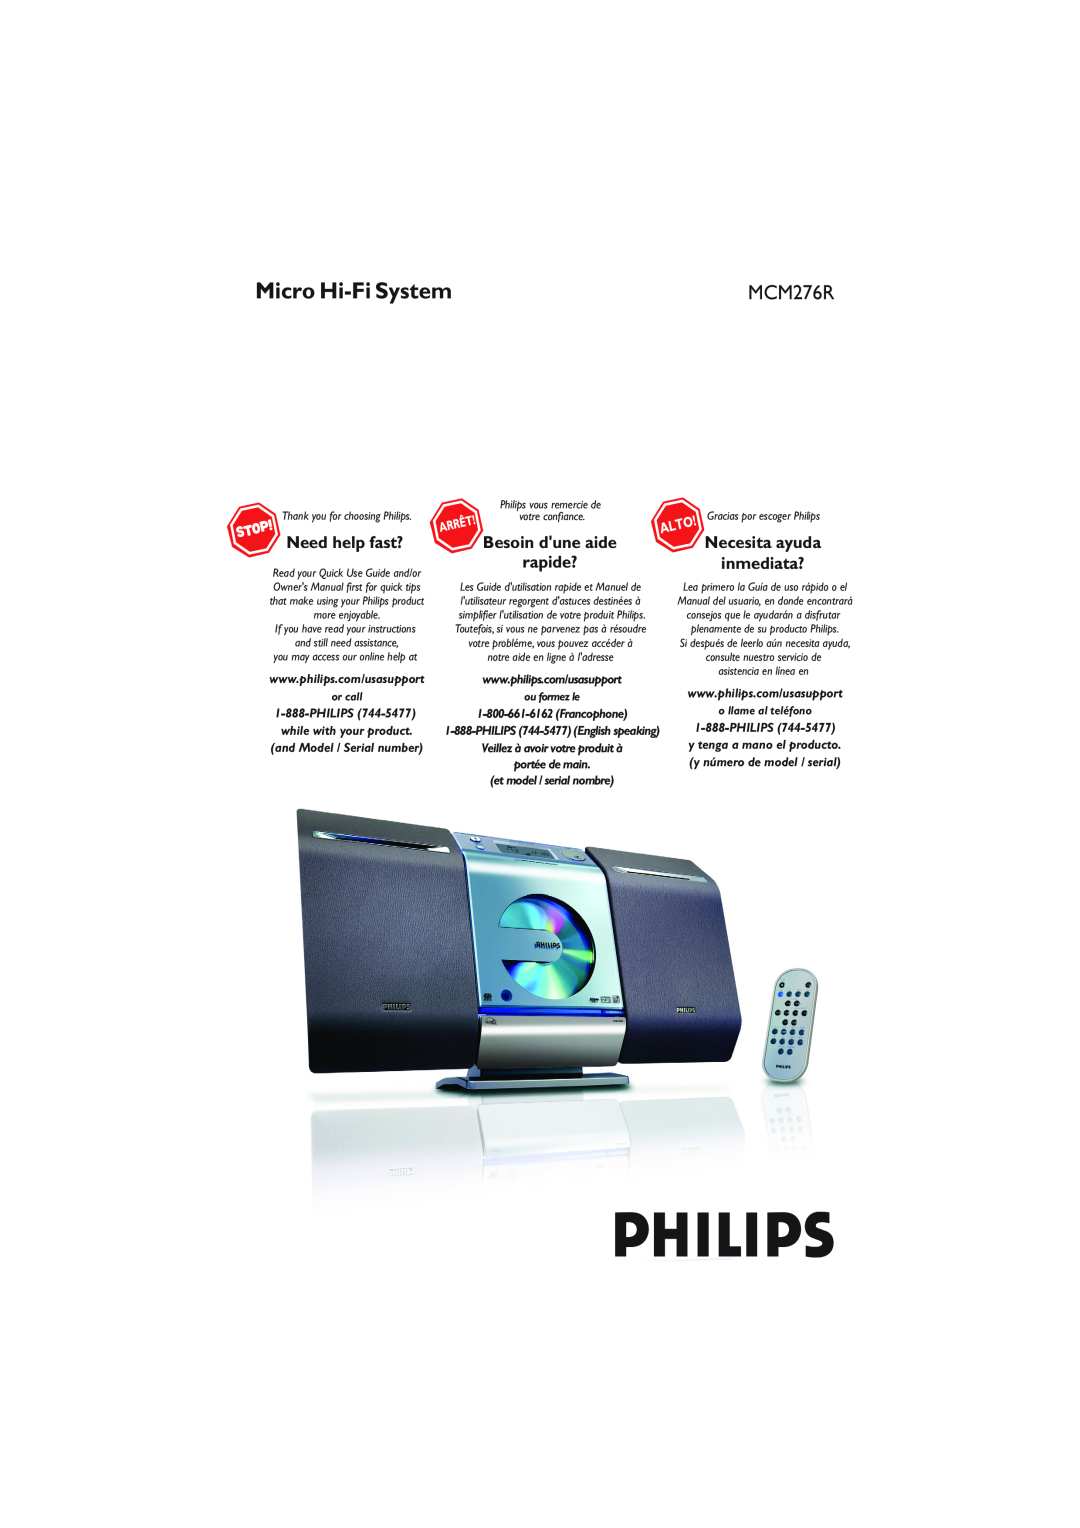 Philips MCM276R owner manual Micro Hi-FiSystem, Necesita ayuda inmediata?, Need help fast?, Besoin dune aide, rapide? 